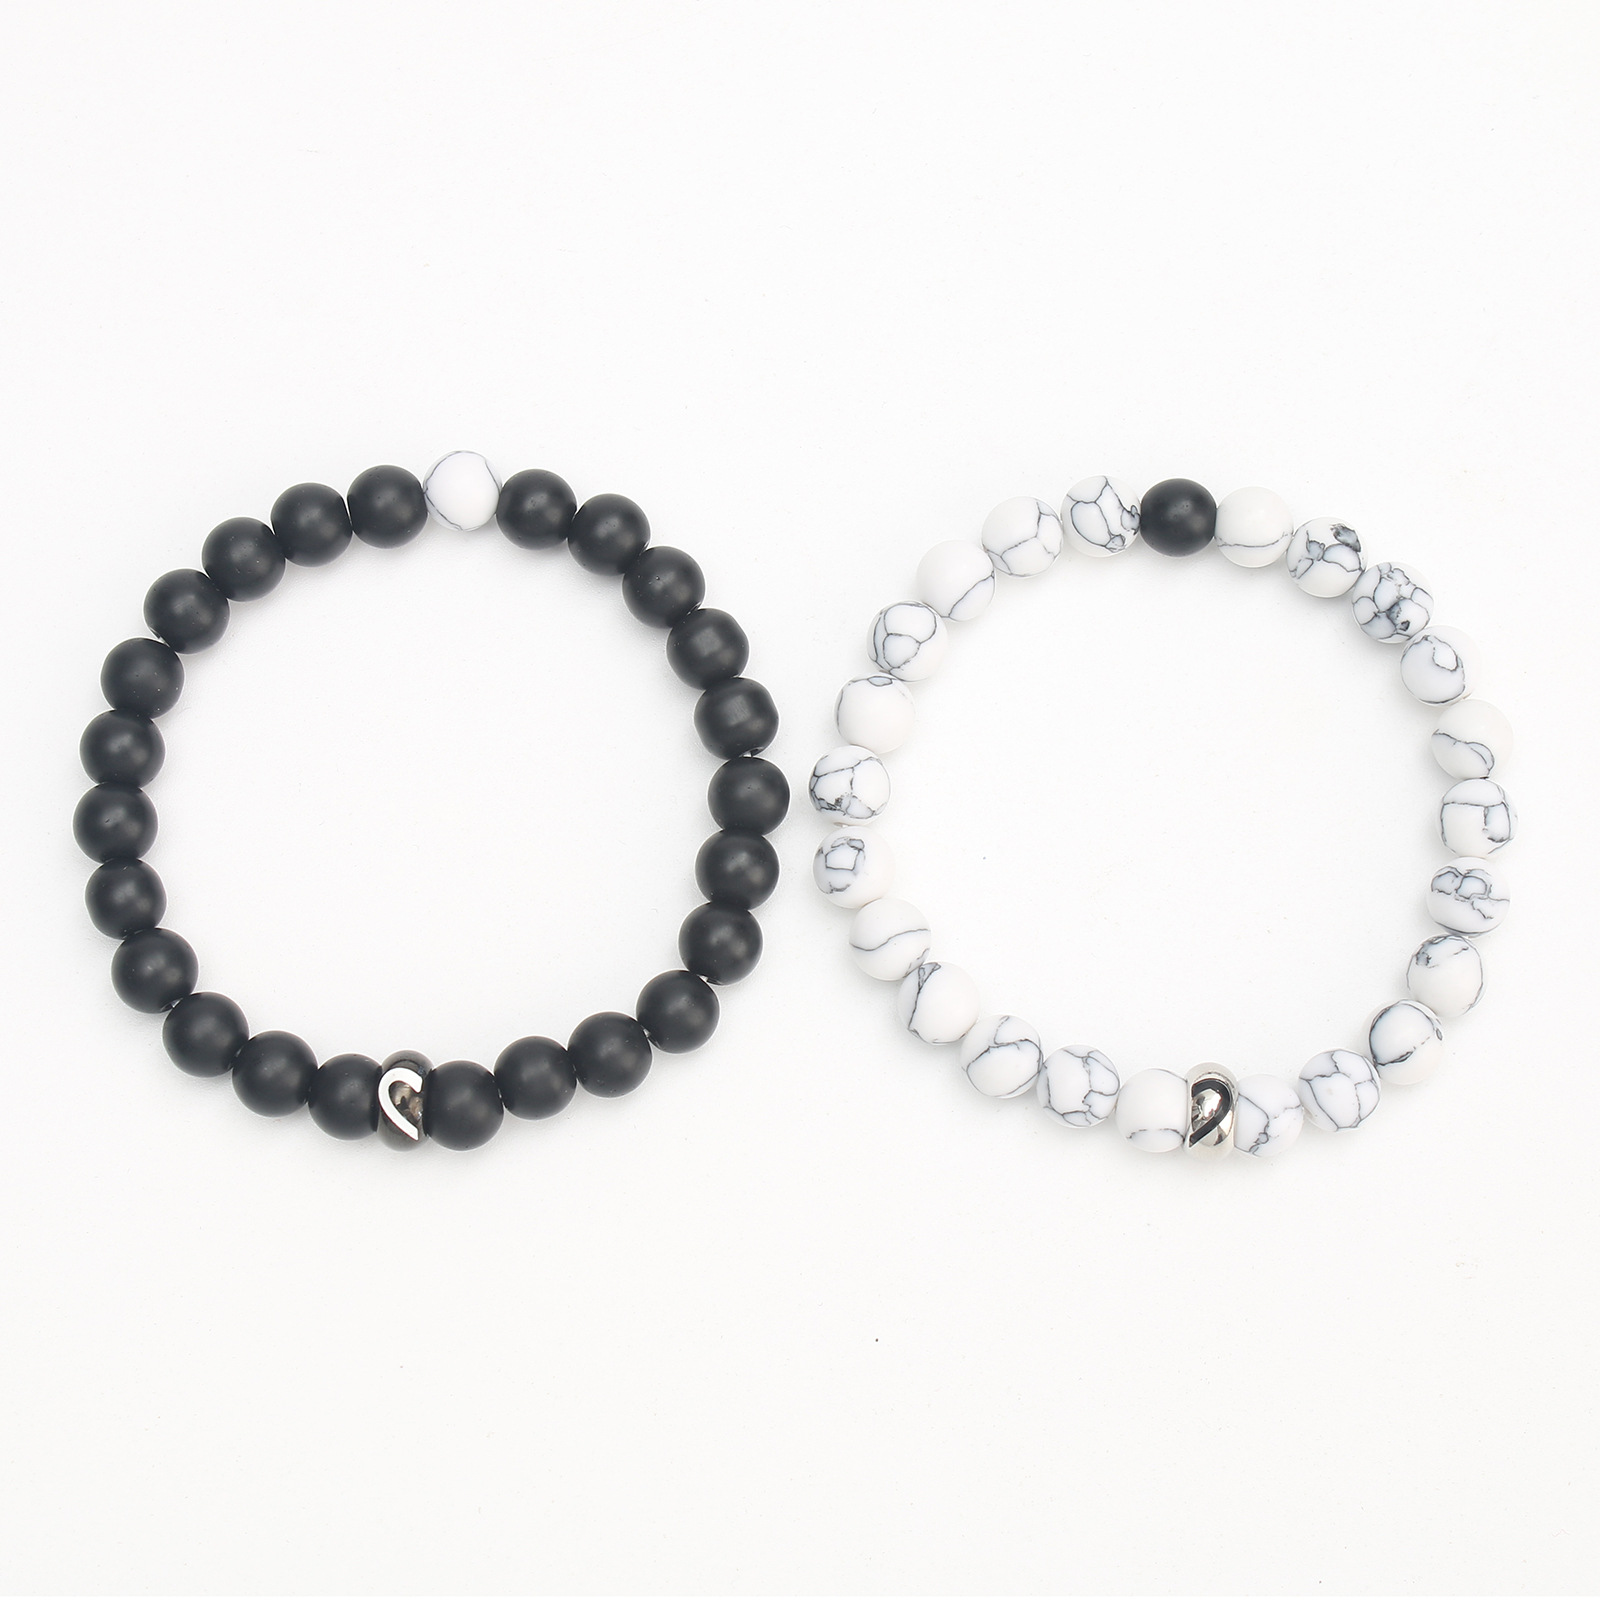 Stainless steel love white pine black frosted bracelet pair